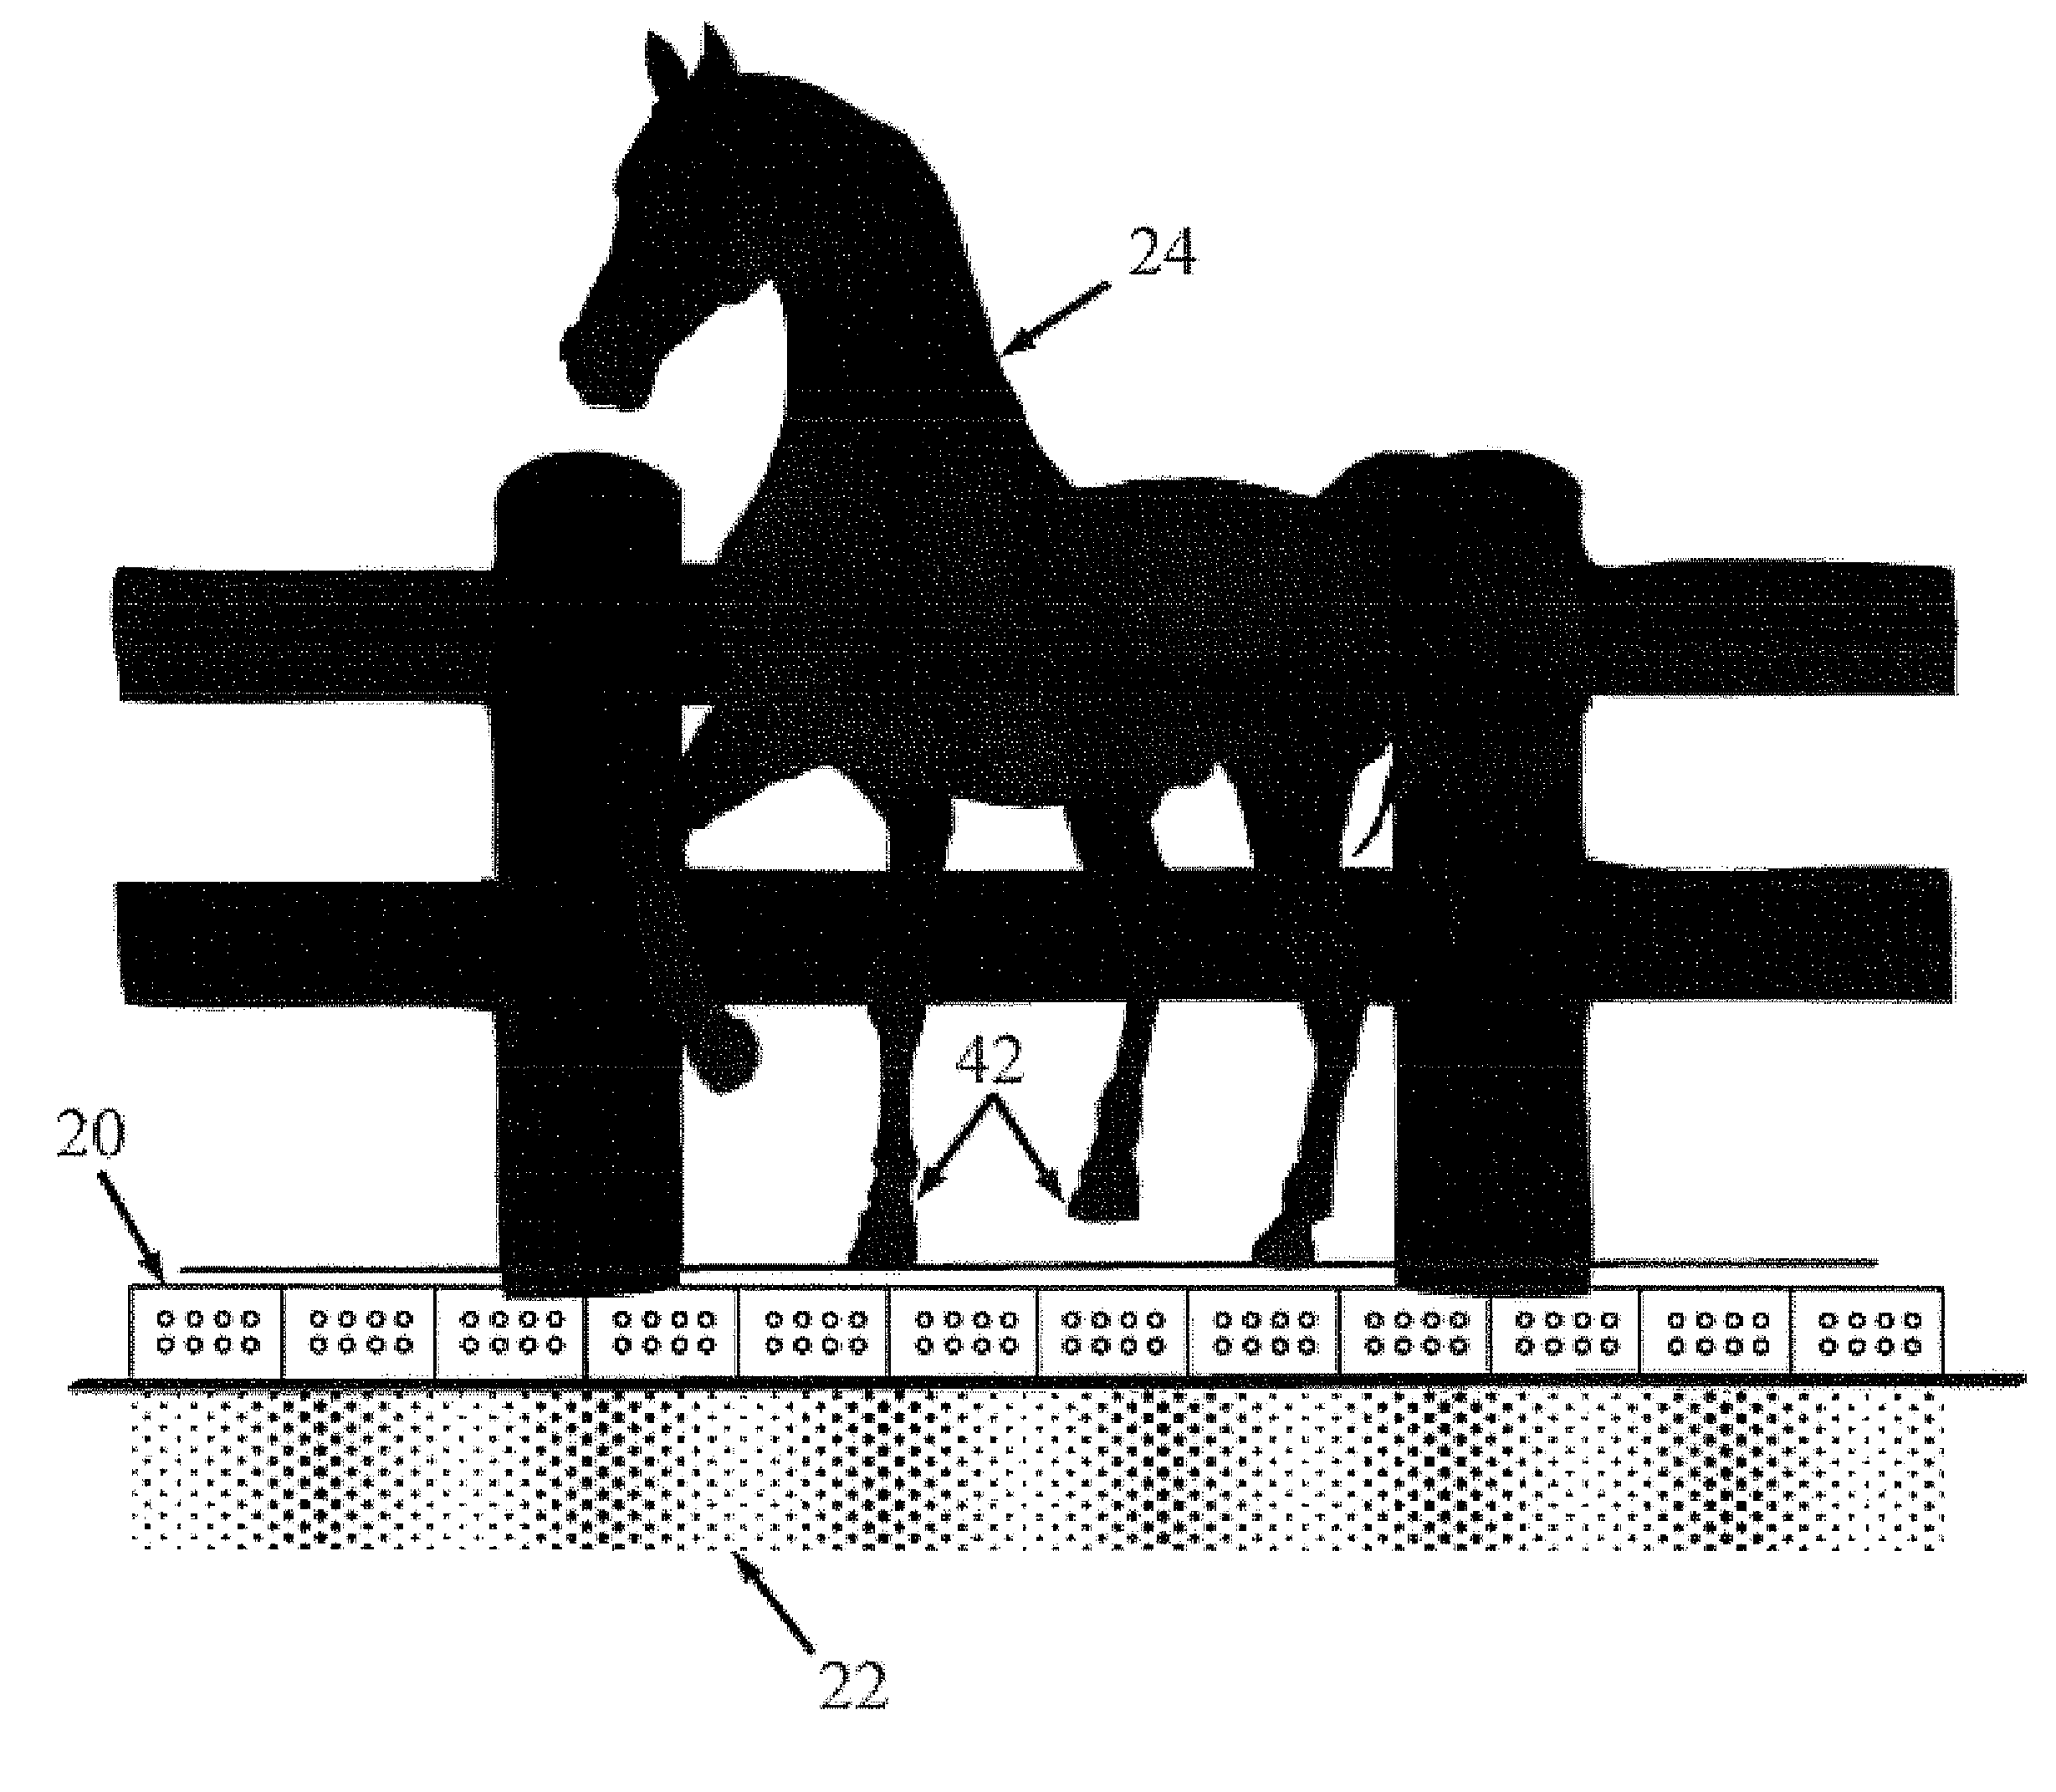 Method of reducing mud in an animal stable, pen, paddock, or arena